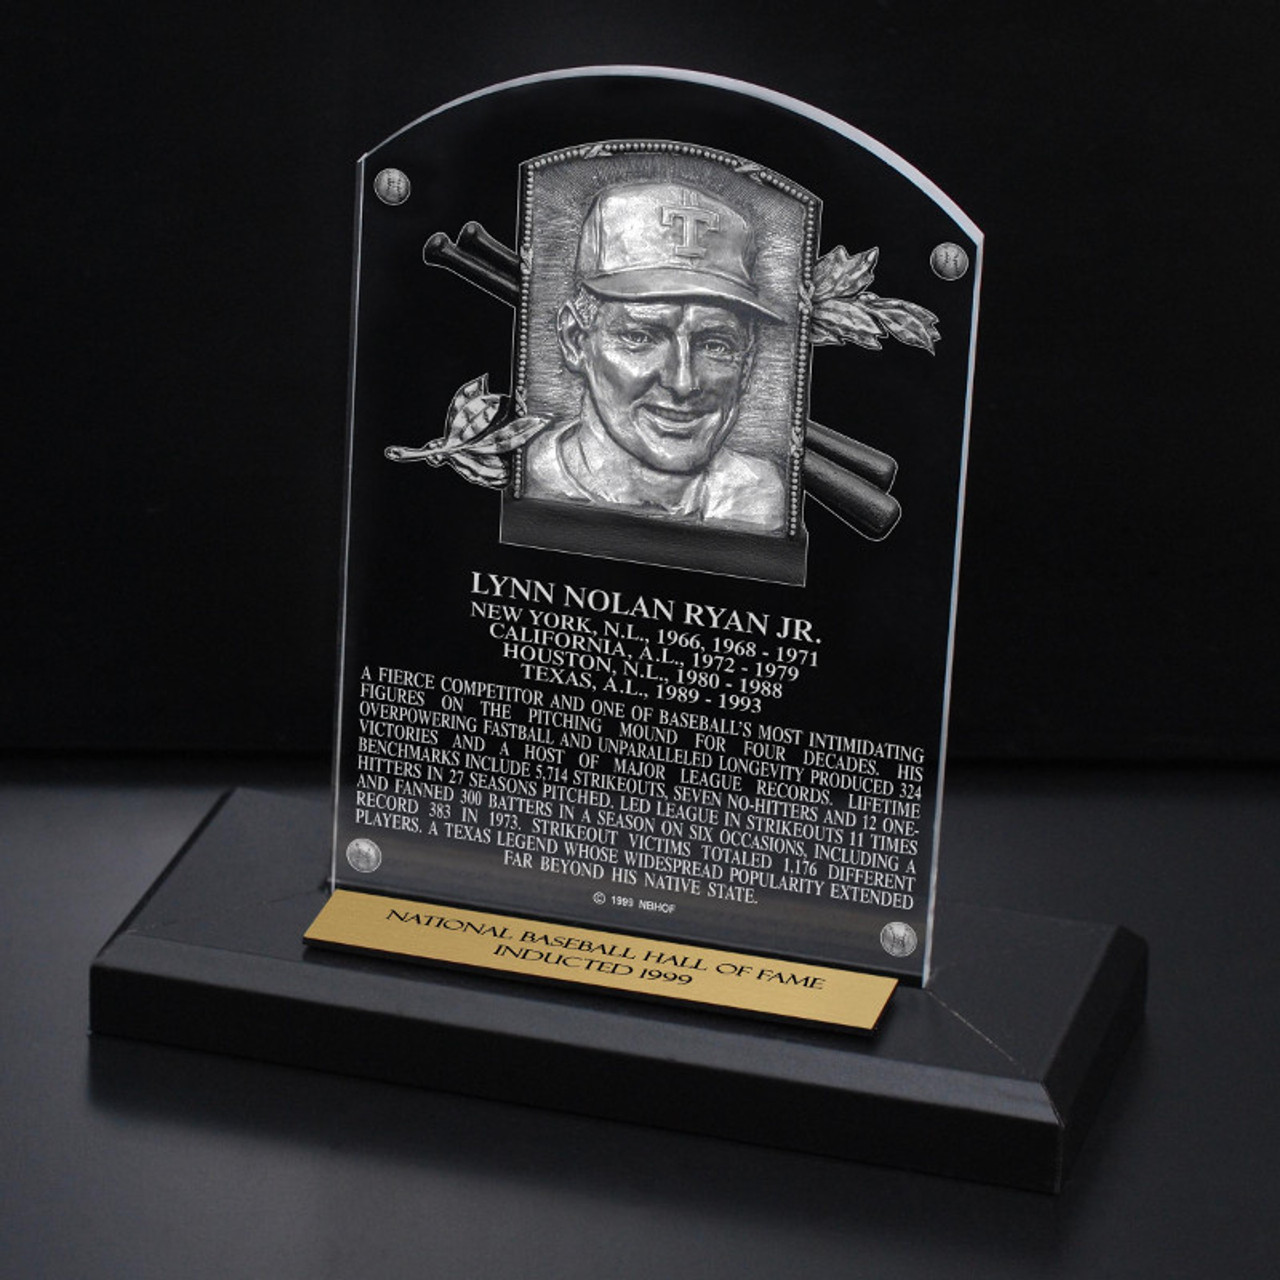 National Baseball Hall of Fame: Lynn Nolan Ryan, Jr.